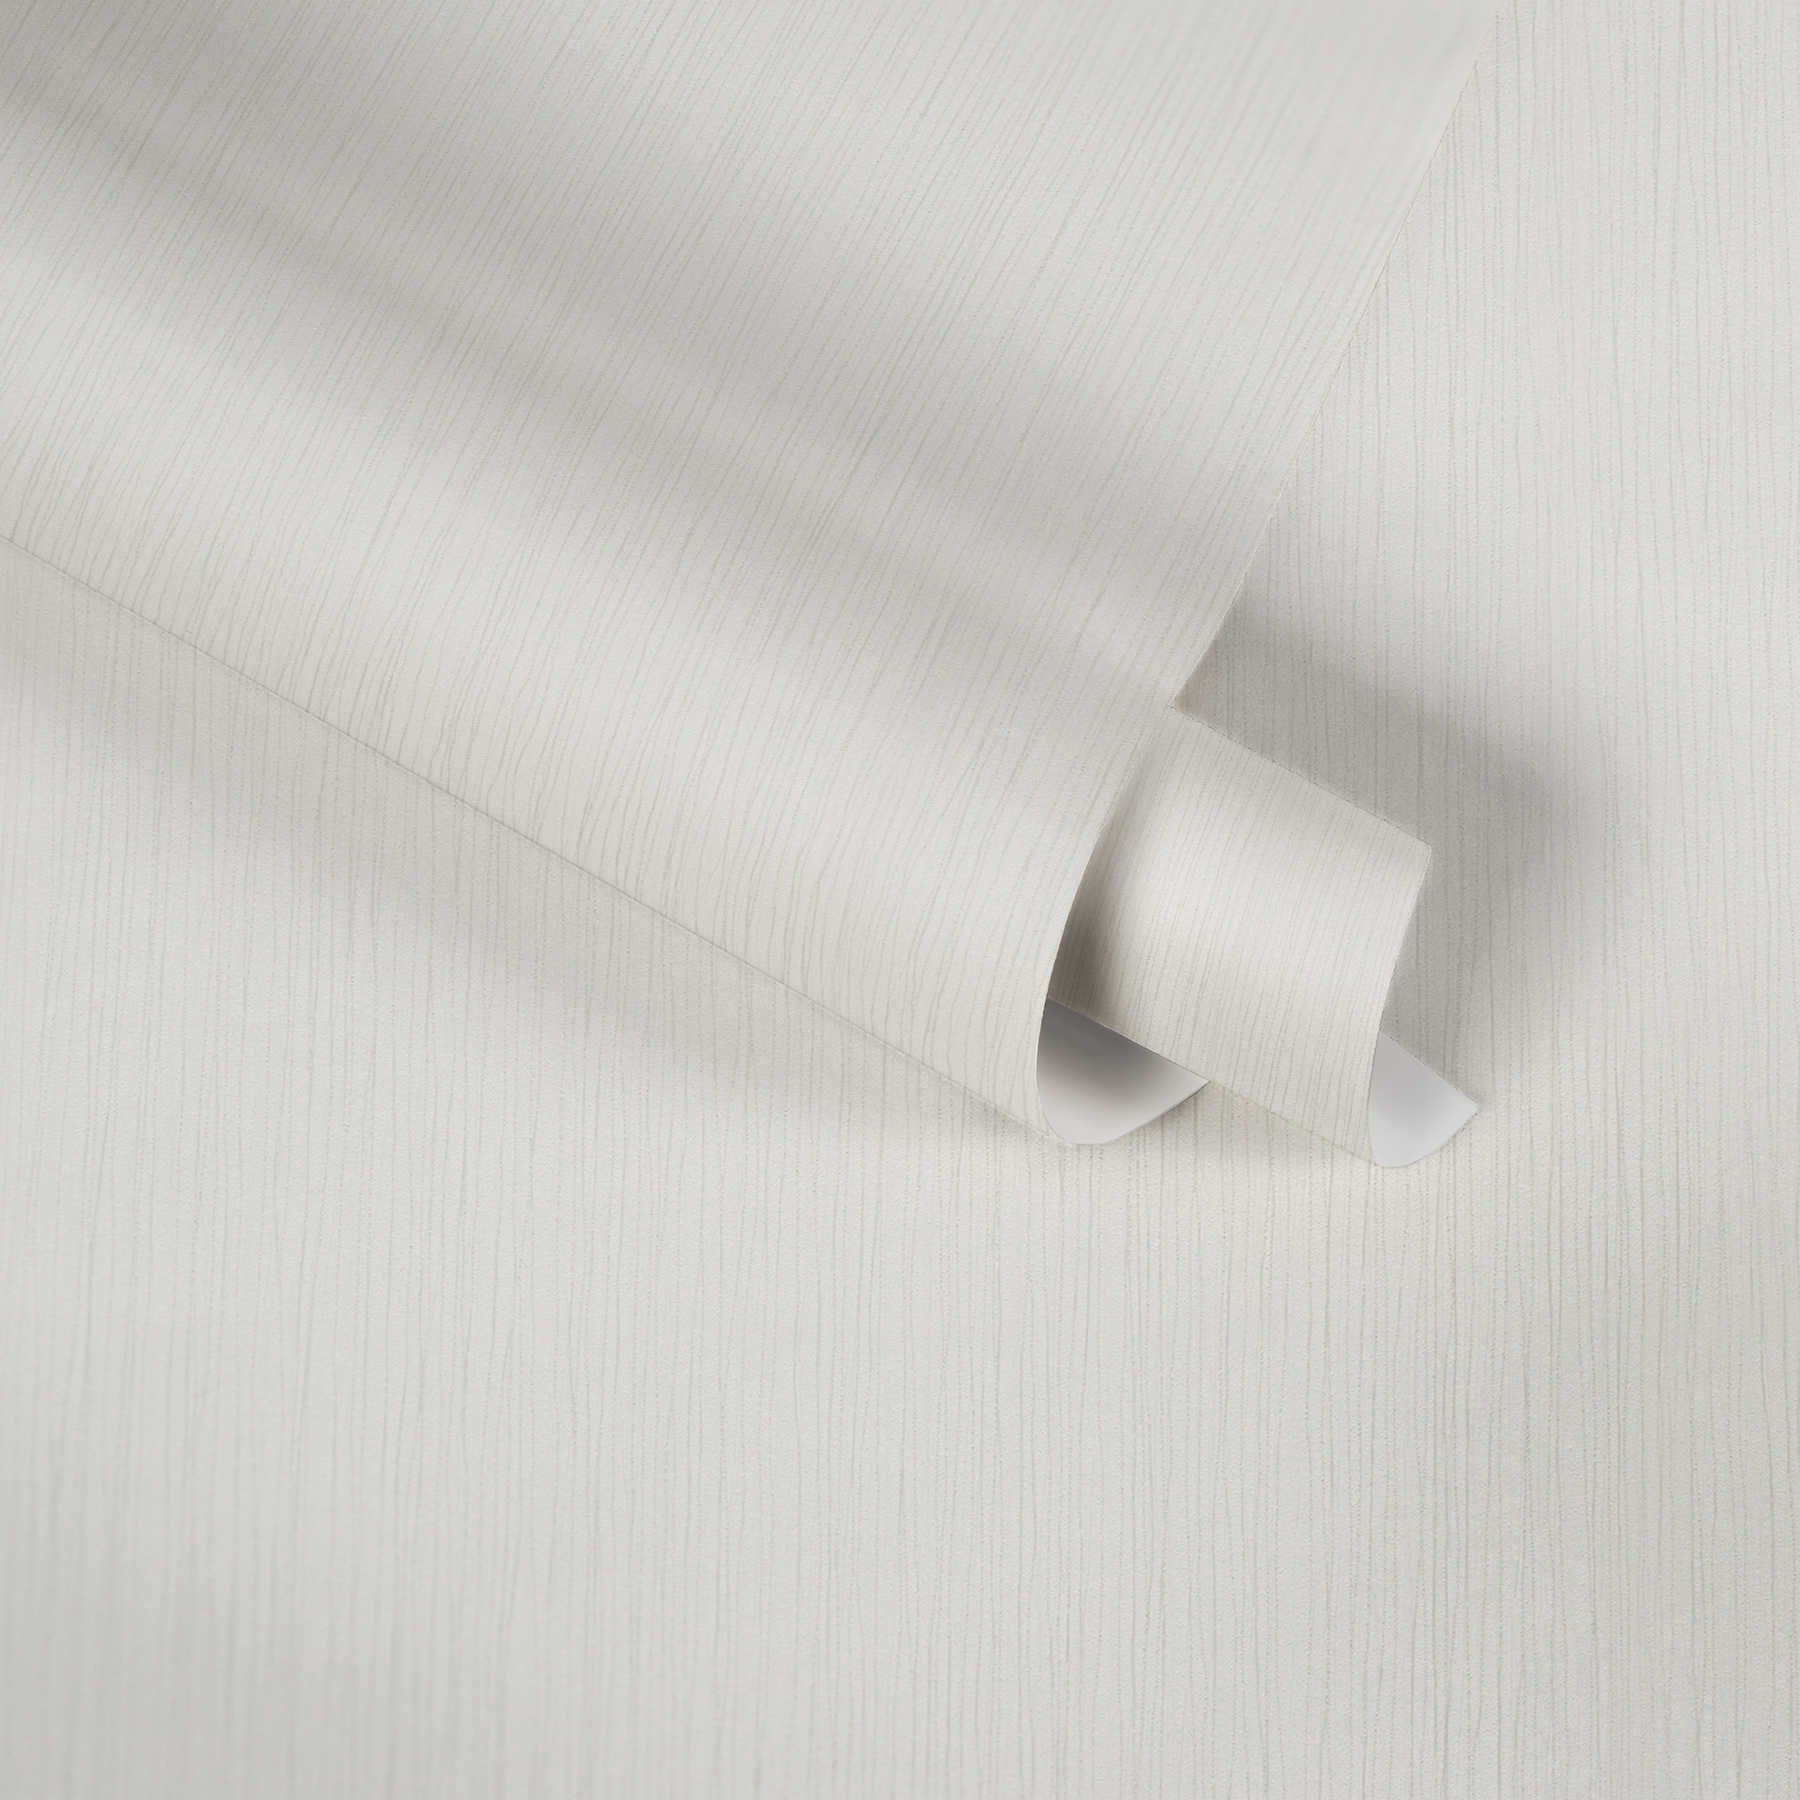             White wallpaper metallic luster & lined texture pattern
        